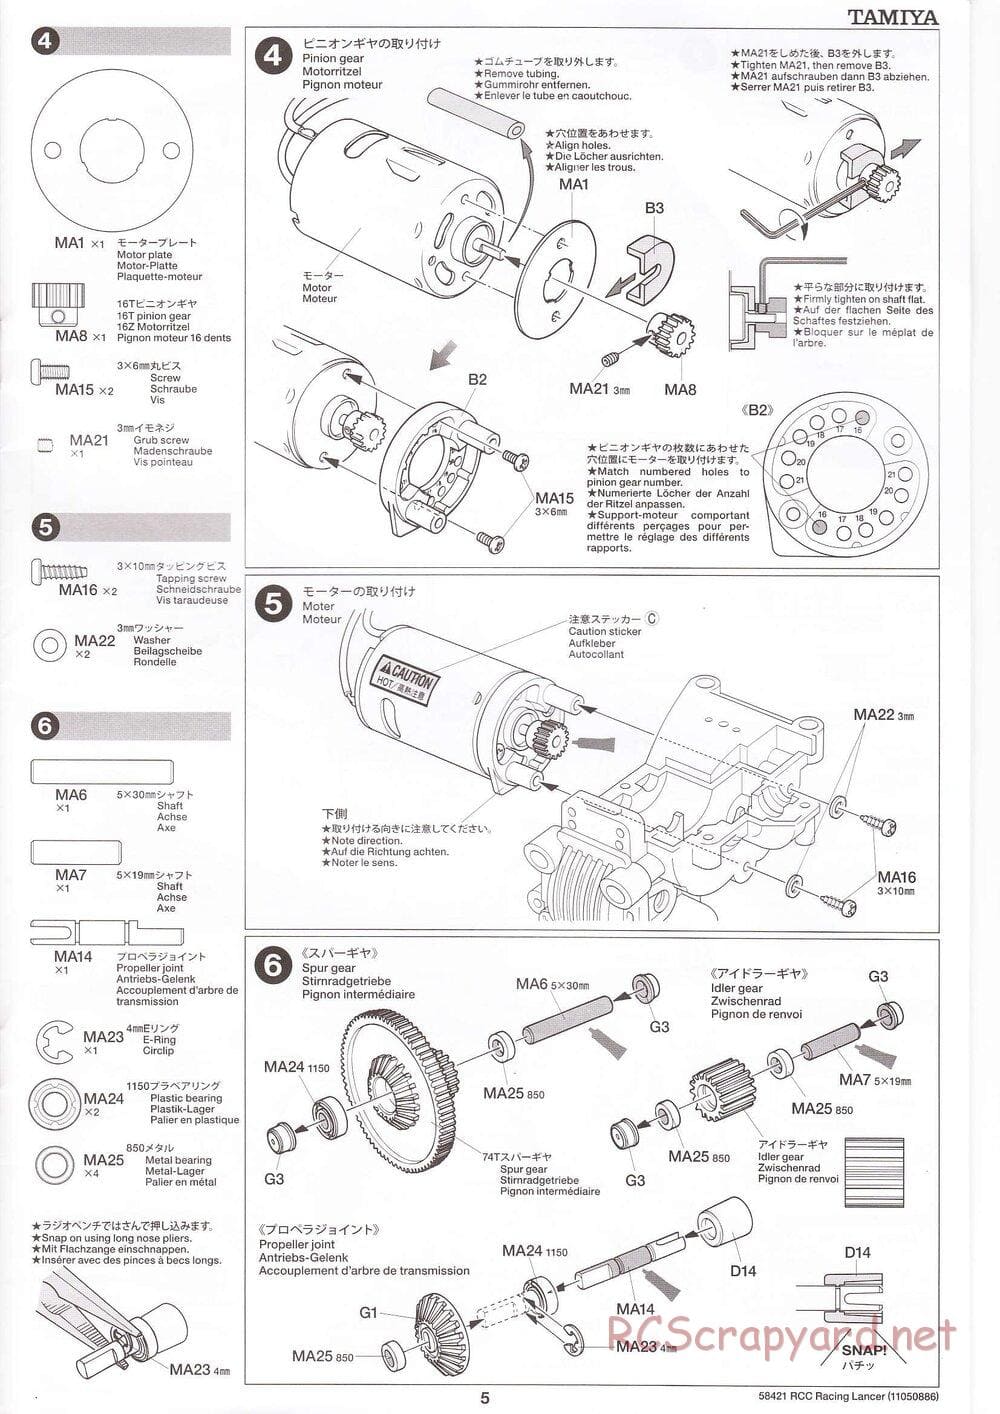 Tamiya - Mitsubishi Racing Lancer - DF-01 Chassis - Manual - Page 5